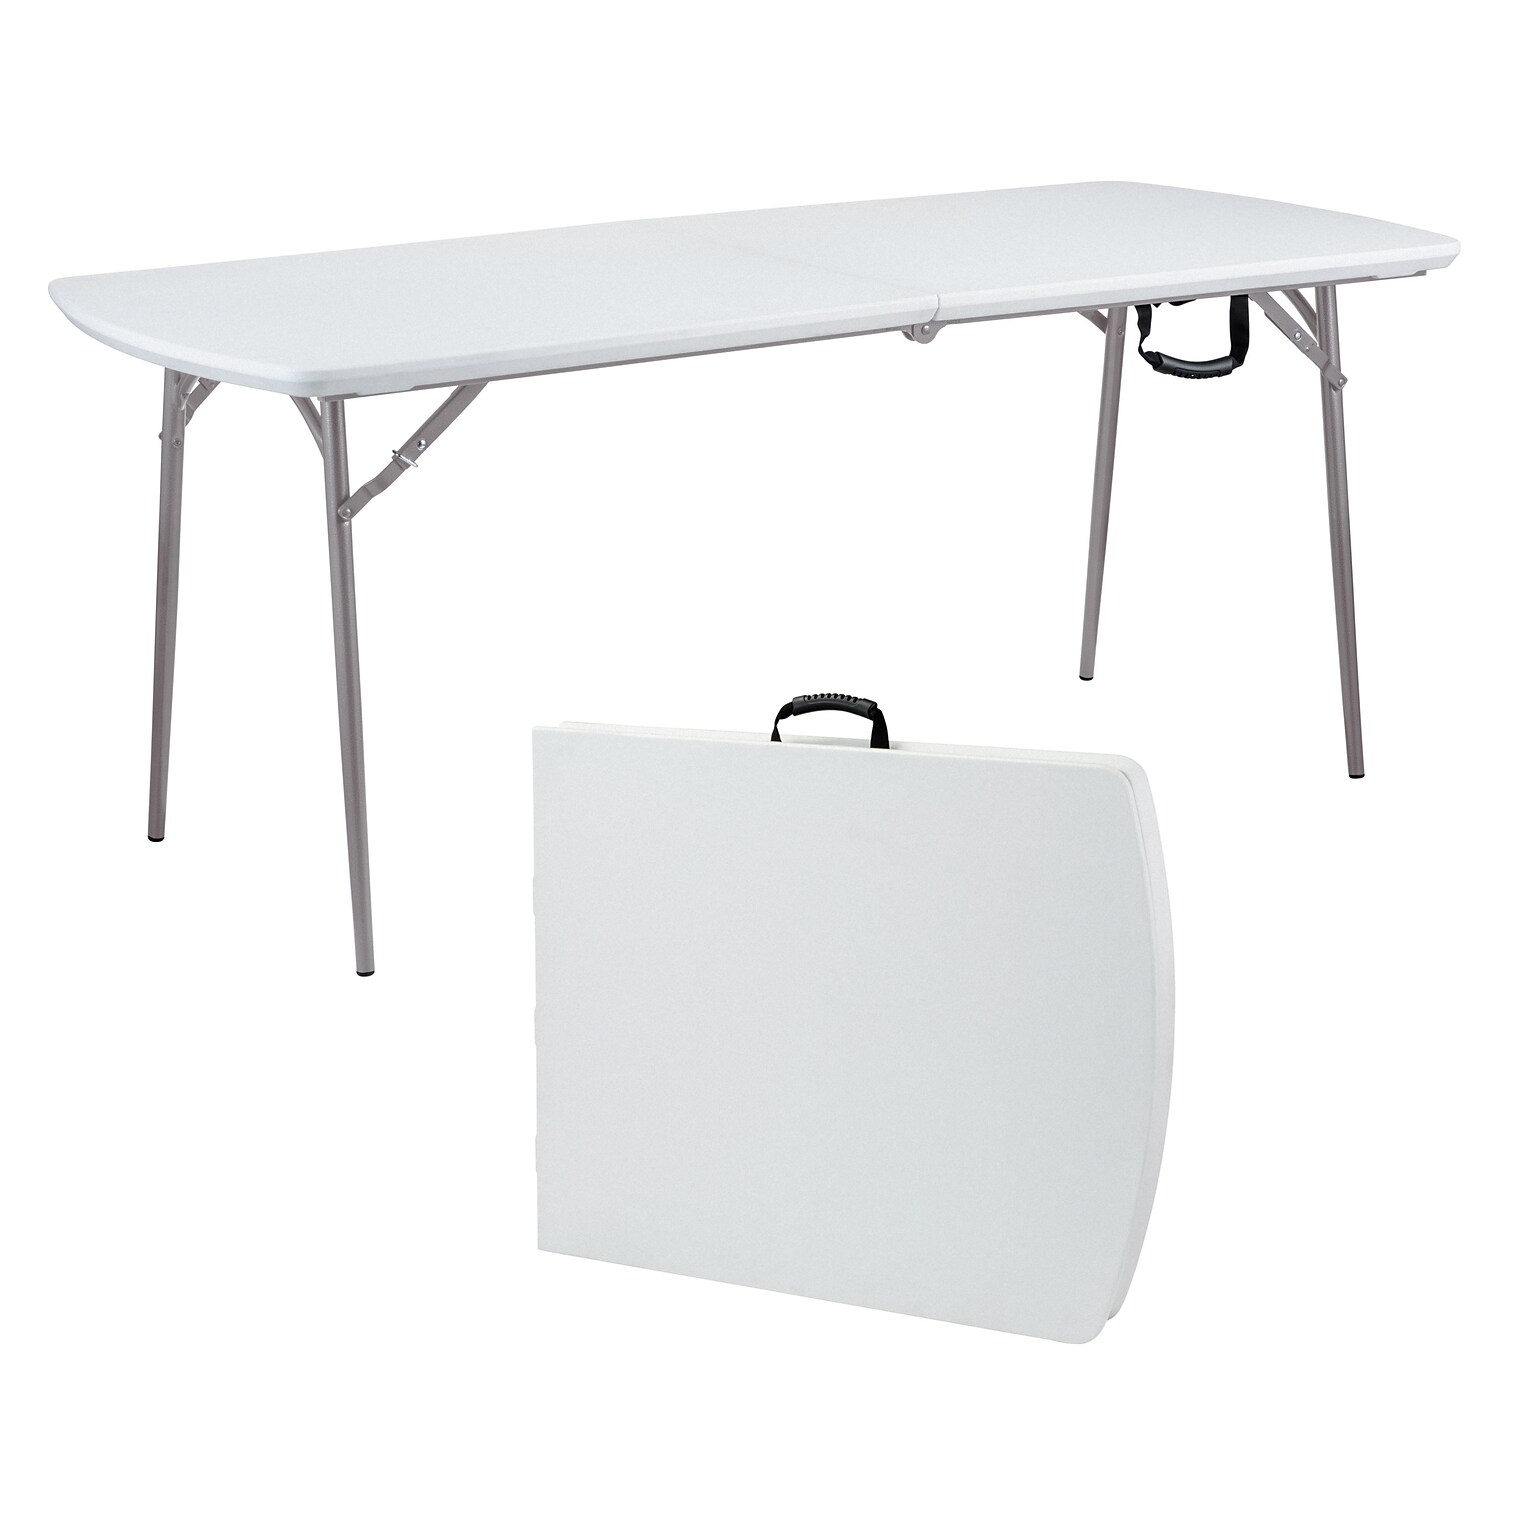 NPS Heavy Duty Fold-in-Half Table, 30 x 72, Speckled Gray (BMFIH30721)